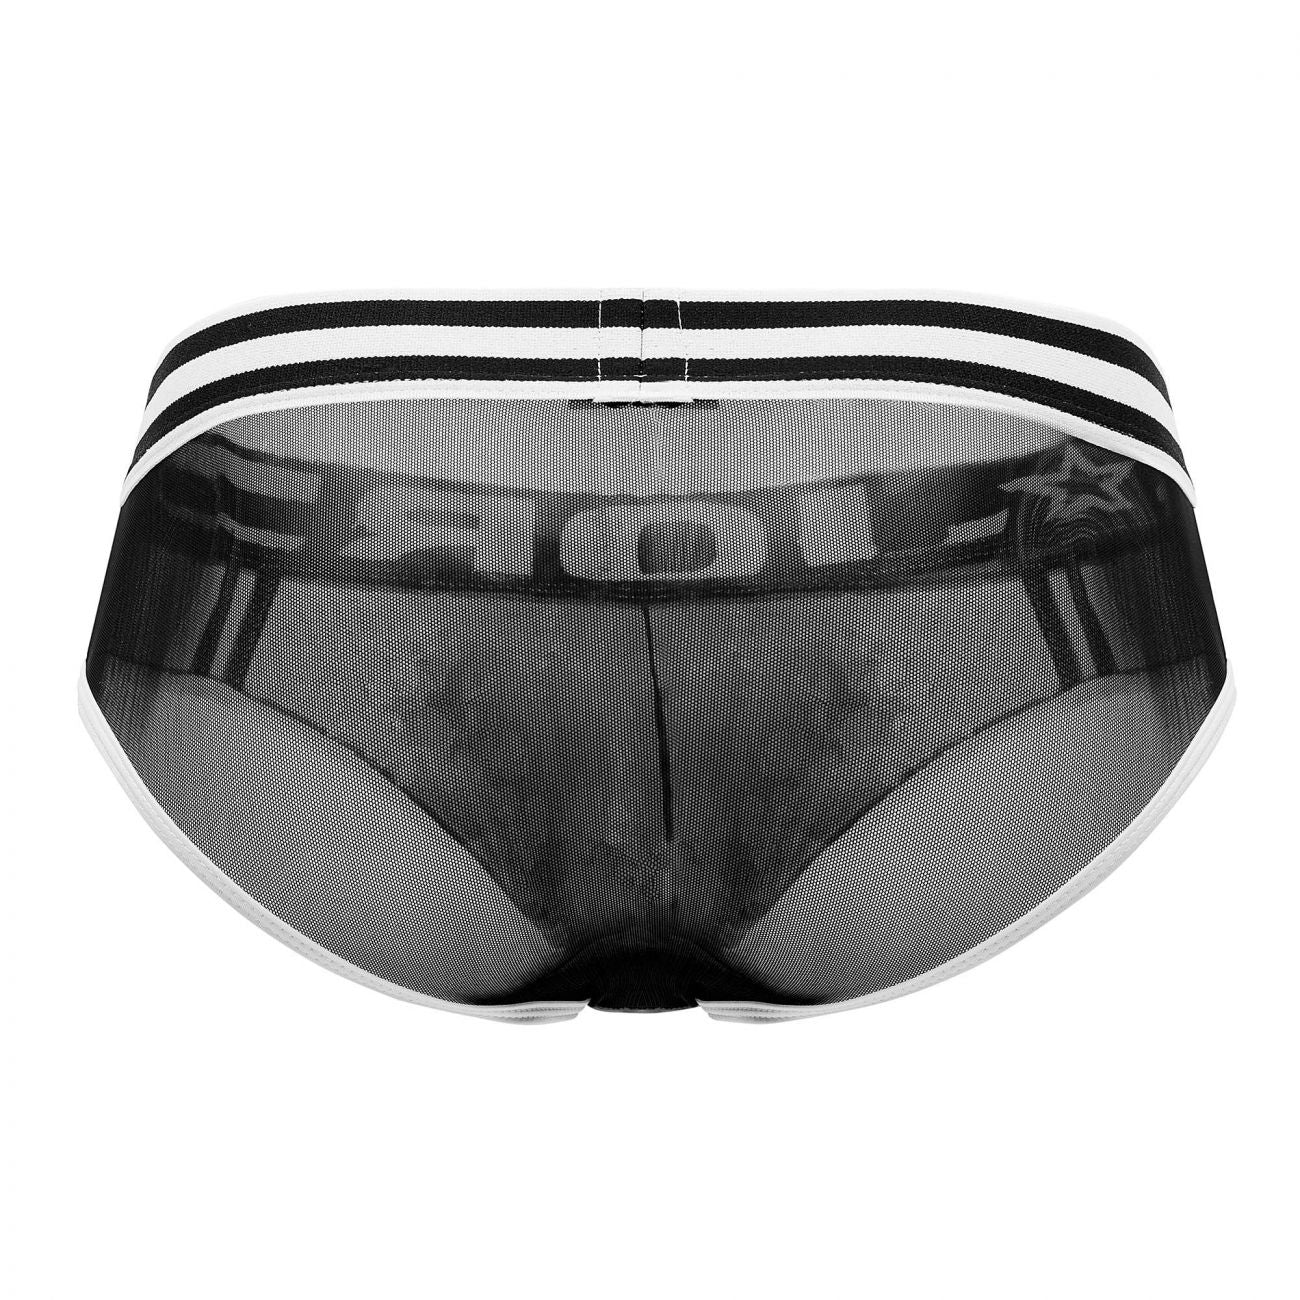 JOR 1485 Pistons Bikini Color Black